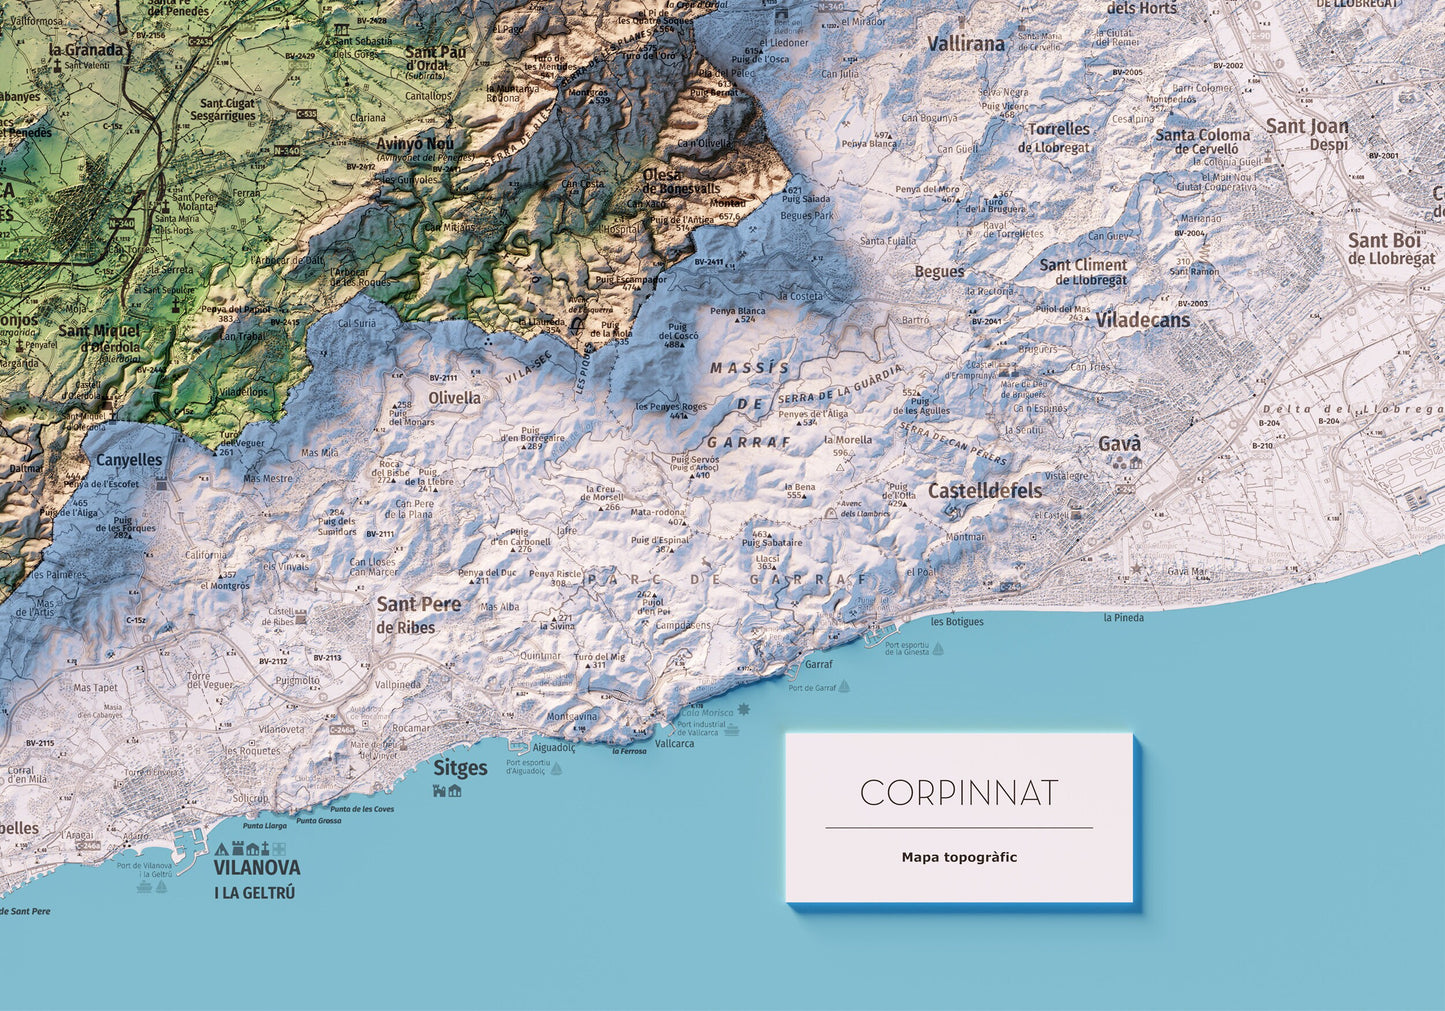 CORPINNAT. Mapa topográfico.